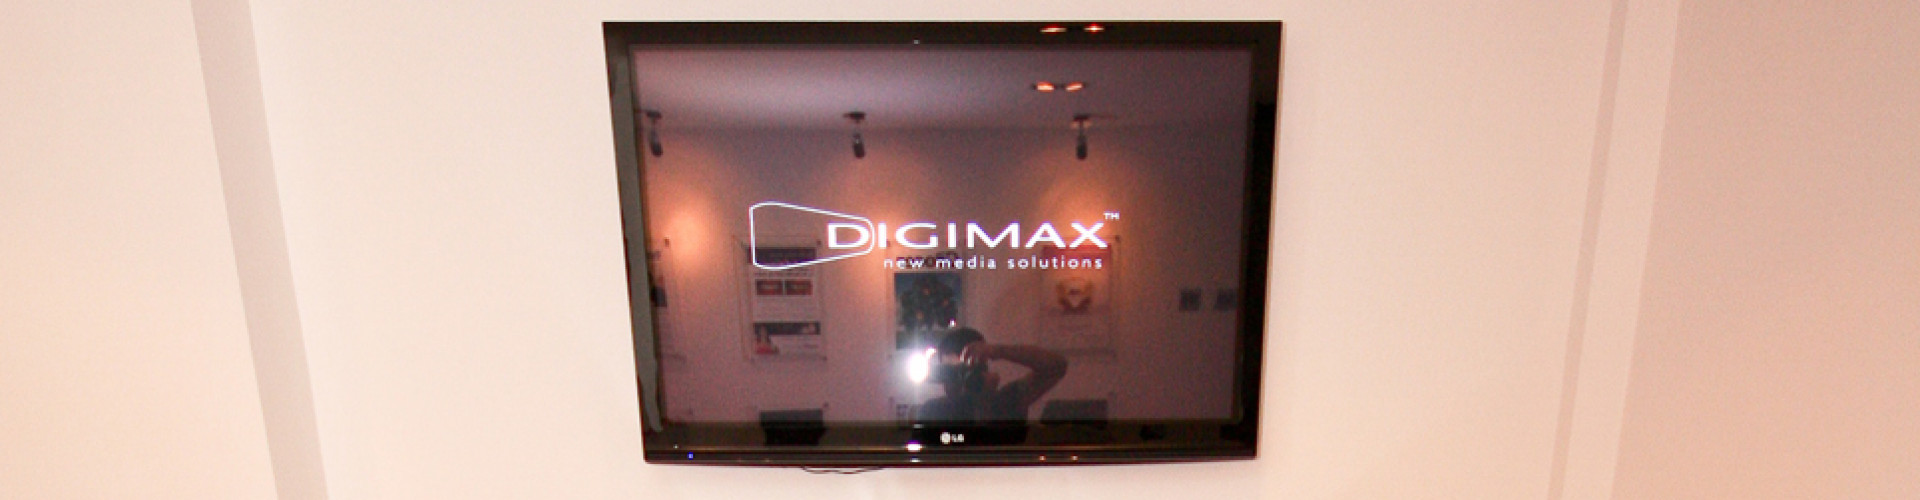 Digimax Dental Marketing Slider 2